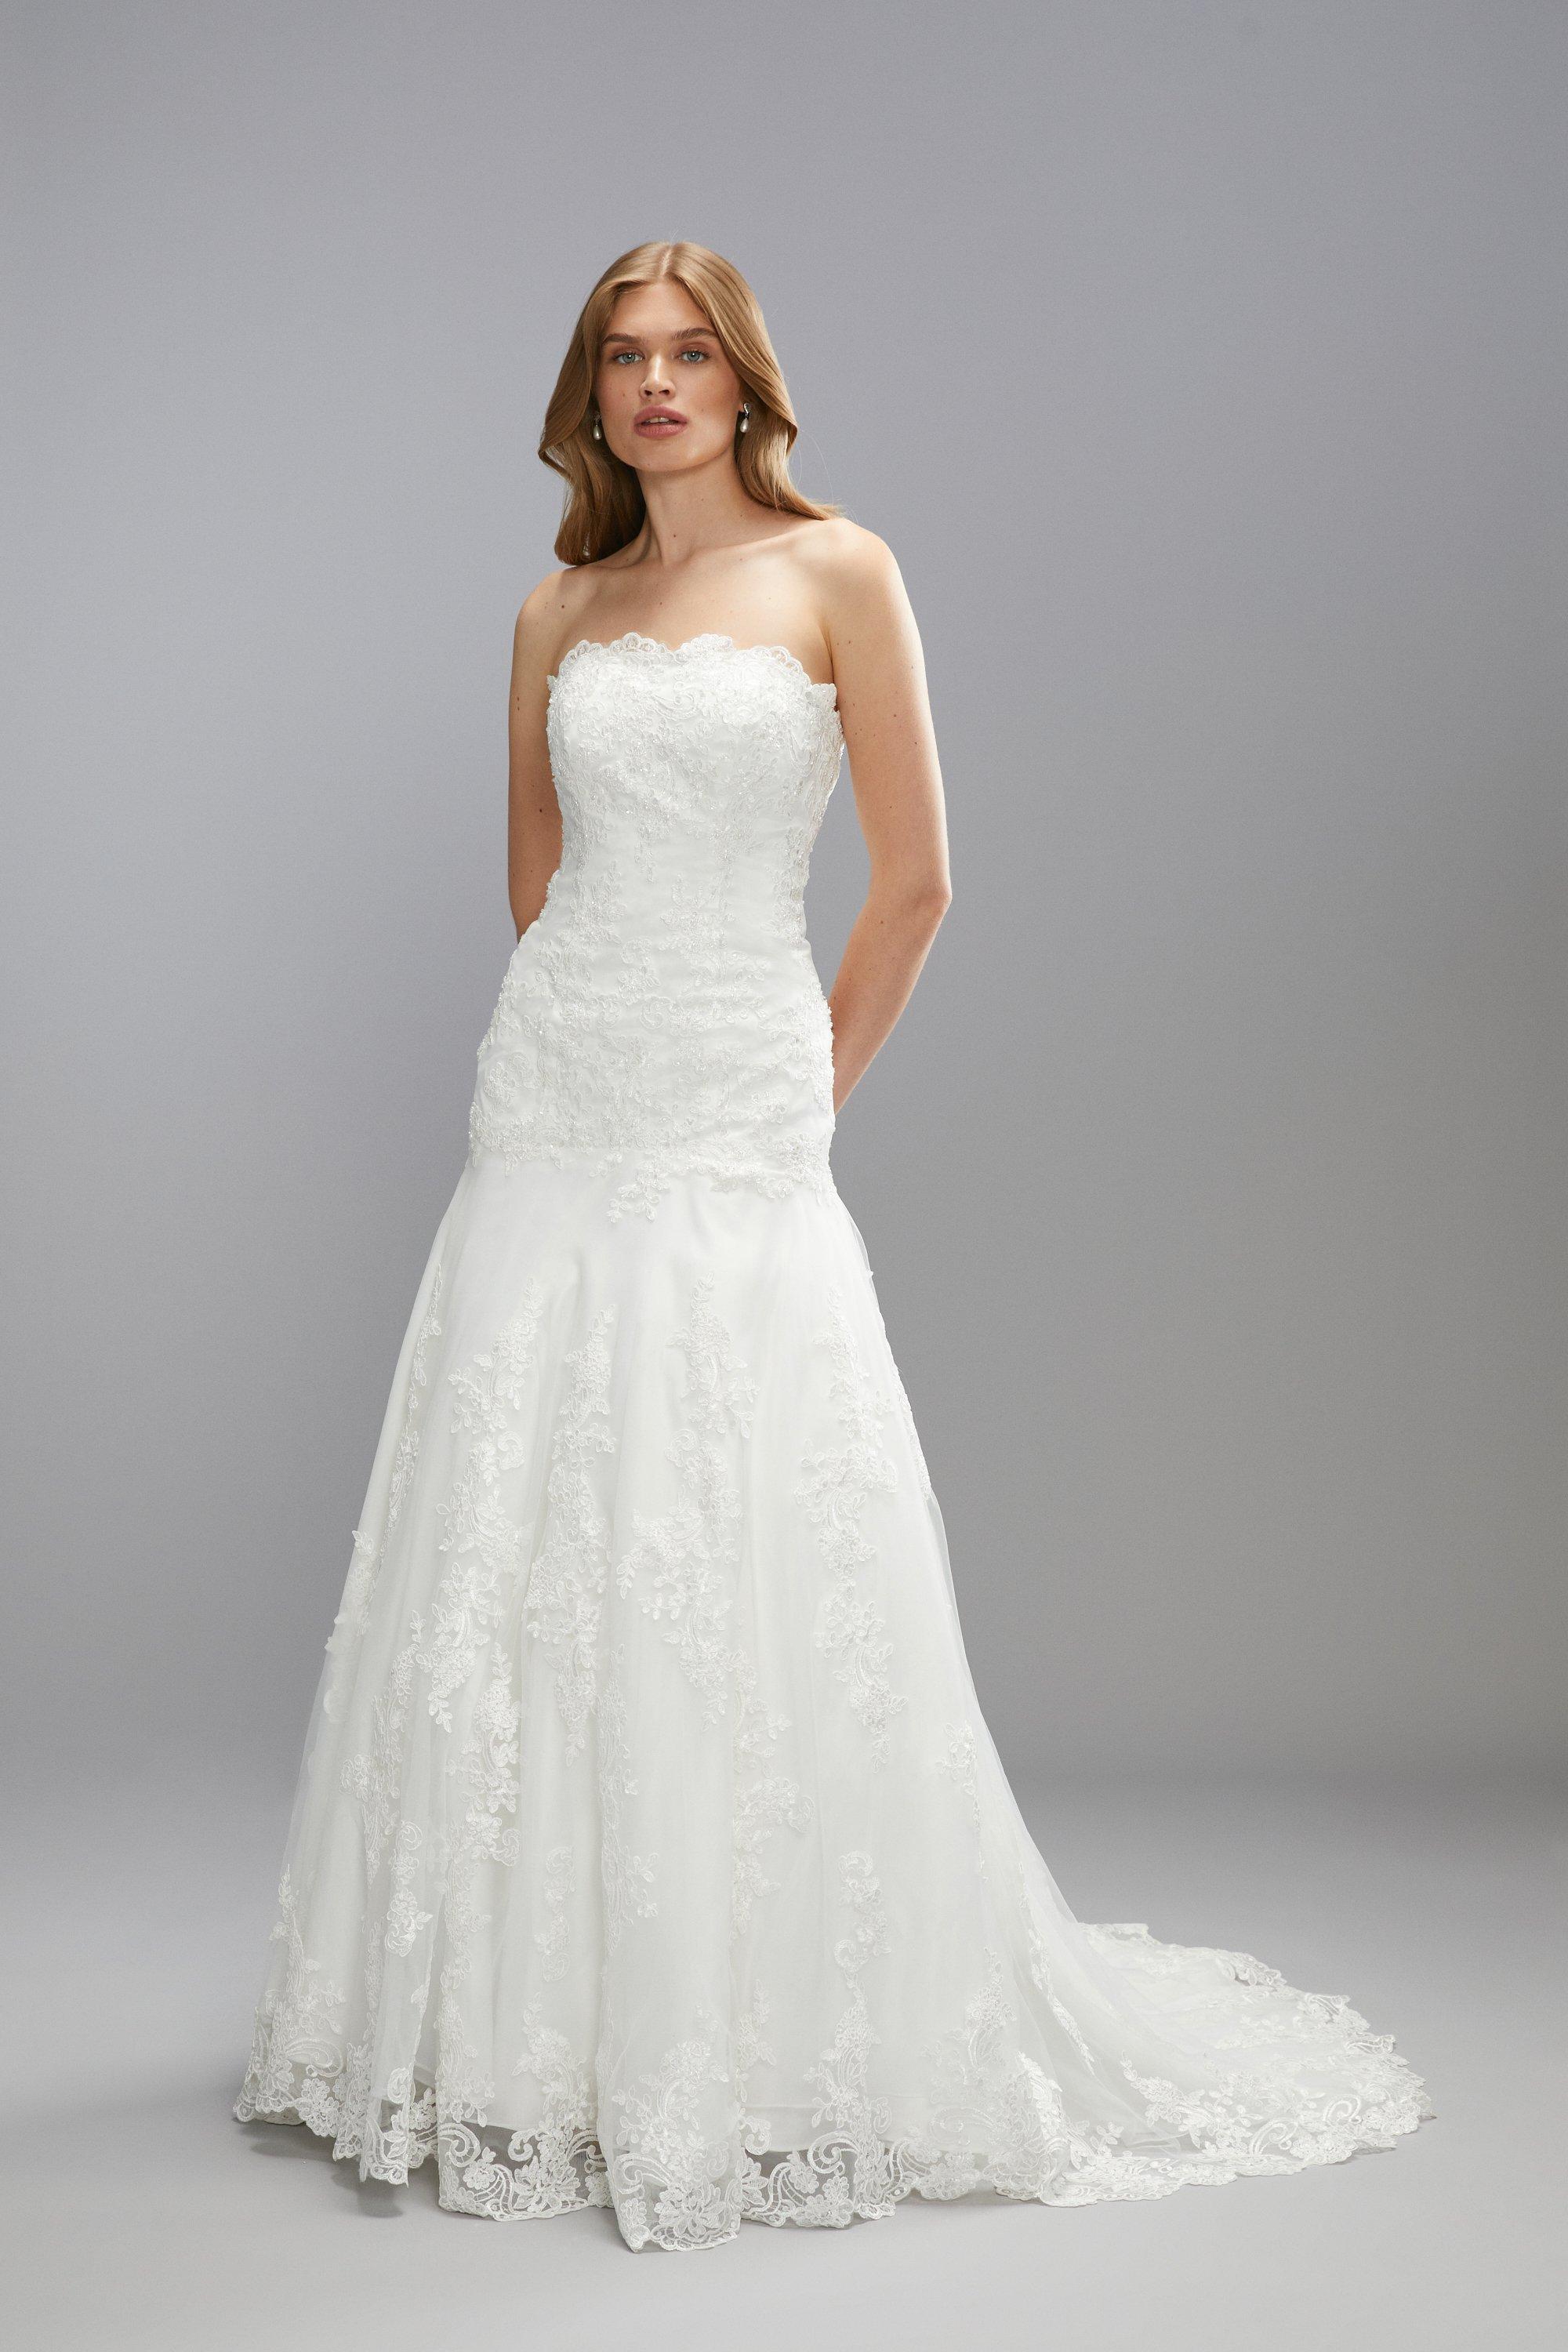 Premium Lace Sweetheart Princess Wedding Dress With Full Skirt - Ivory